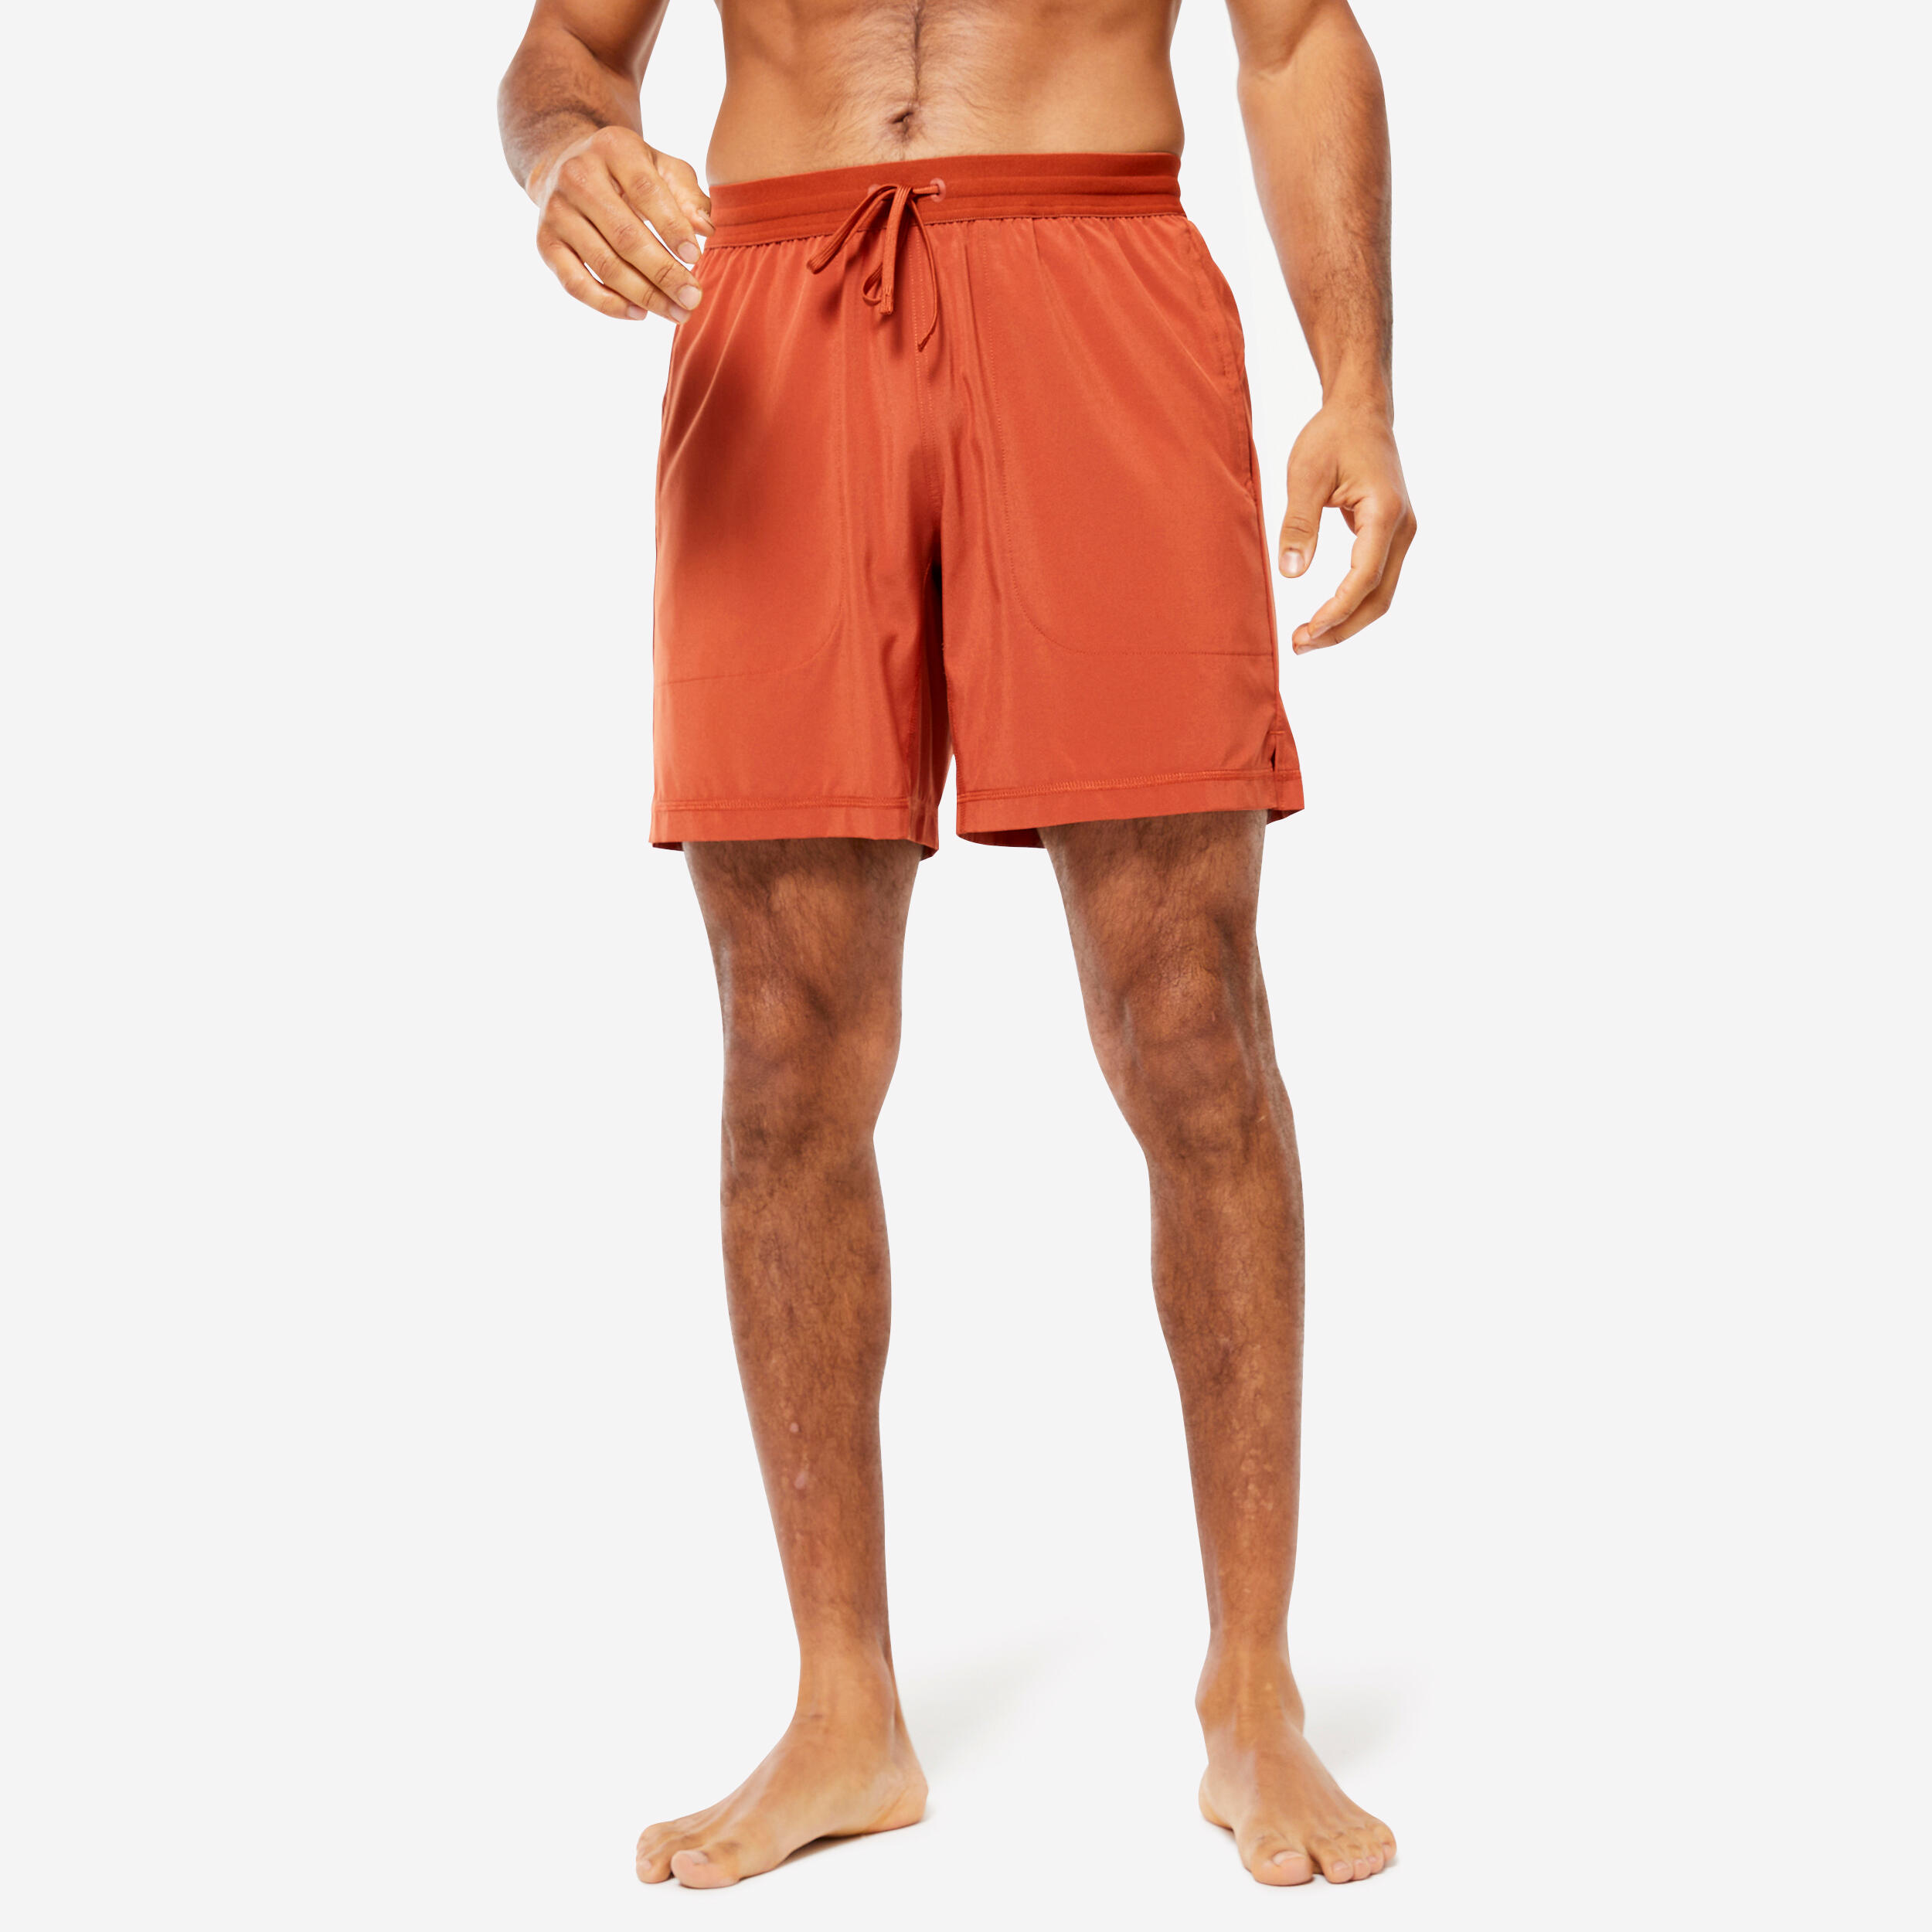 Men's Hot Yoga Ultra-Lightweight Shorts with Built-in Briefs - Sienna 1/5